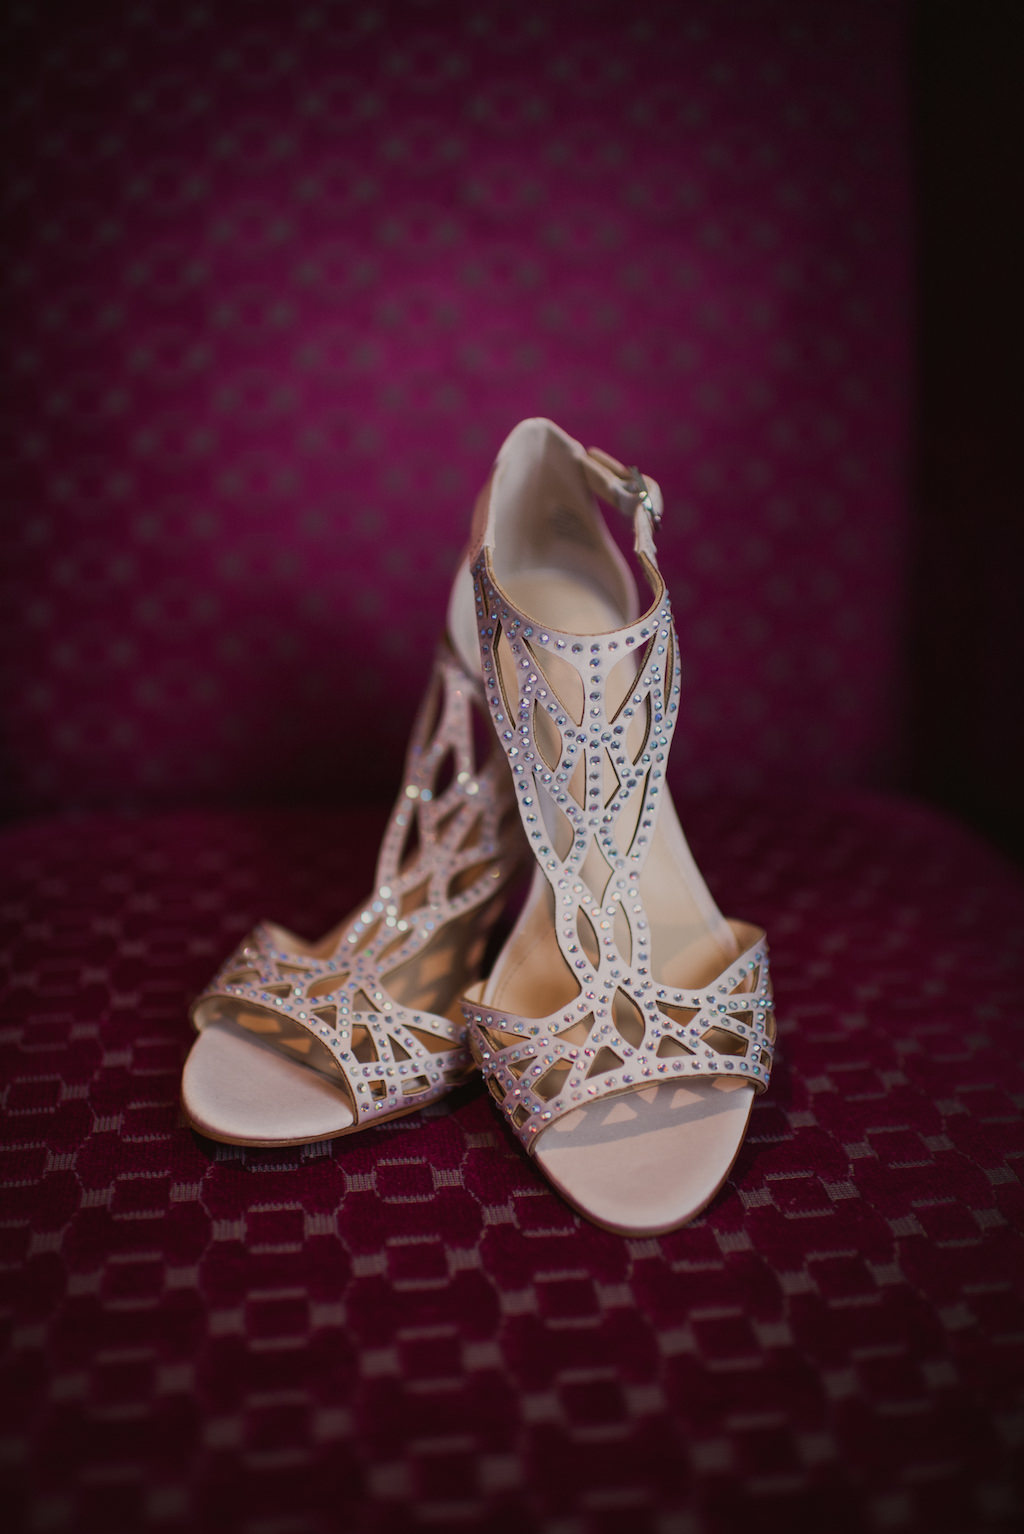 Champagne and Rhinestone Cage Sandal Style Wedding Heel Shoe